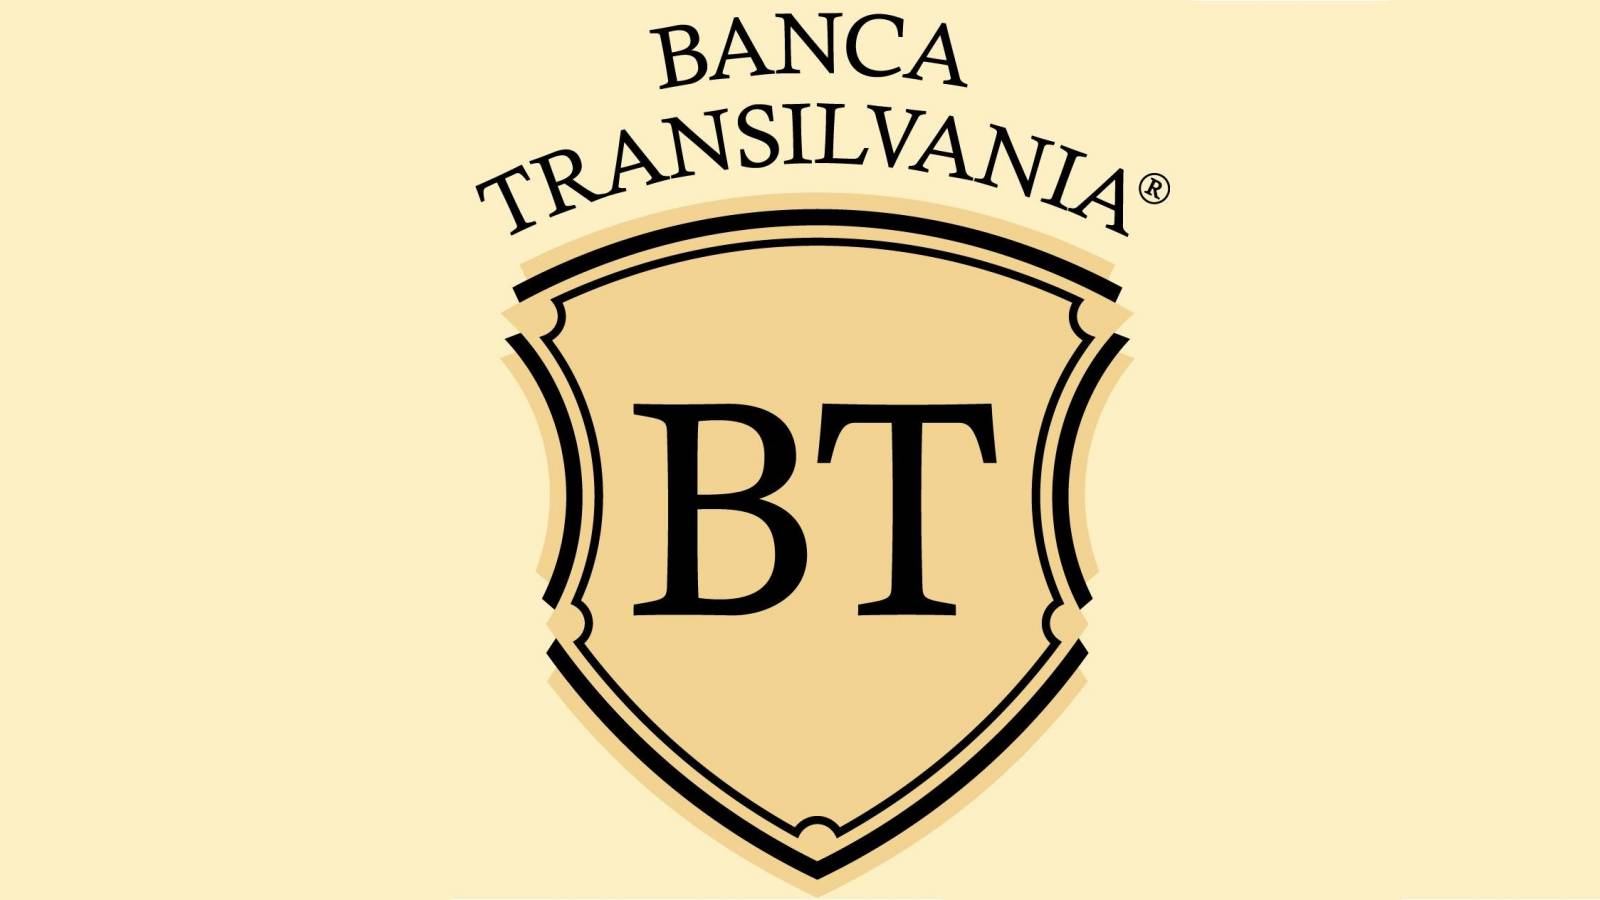 BANCA Transilvania Clientii Informati Oficial da Gratuit Plati Astazi